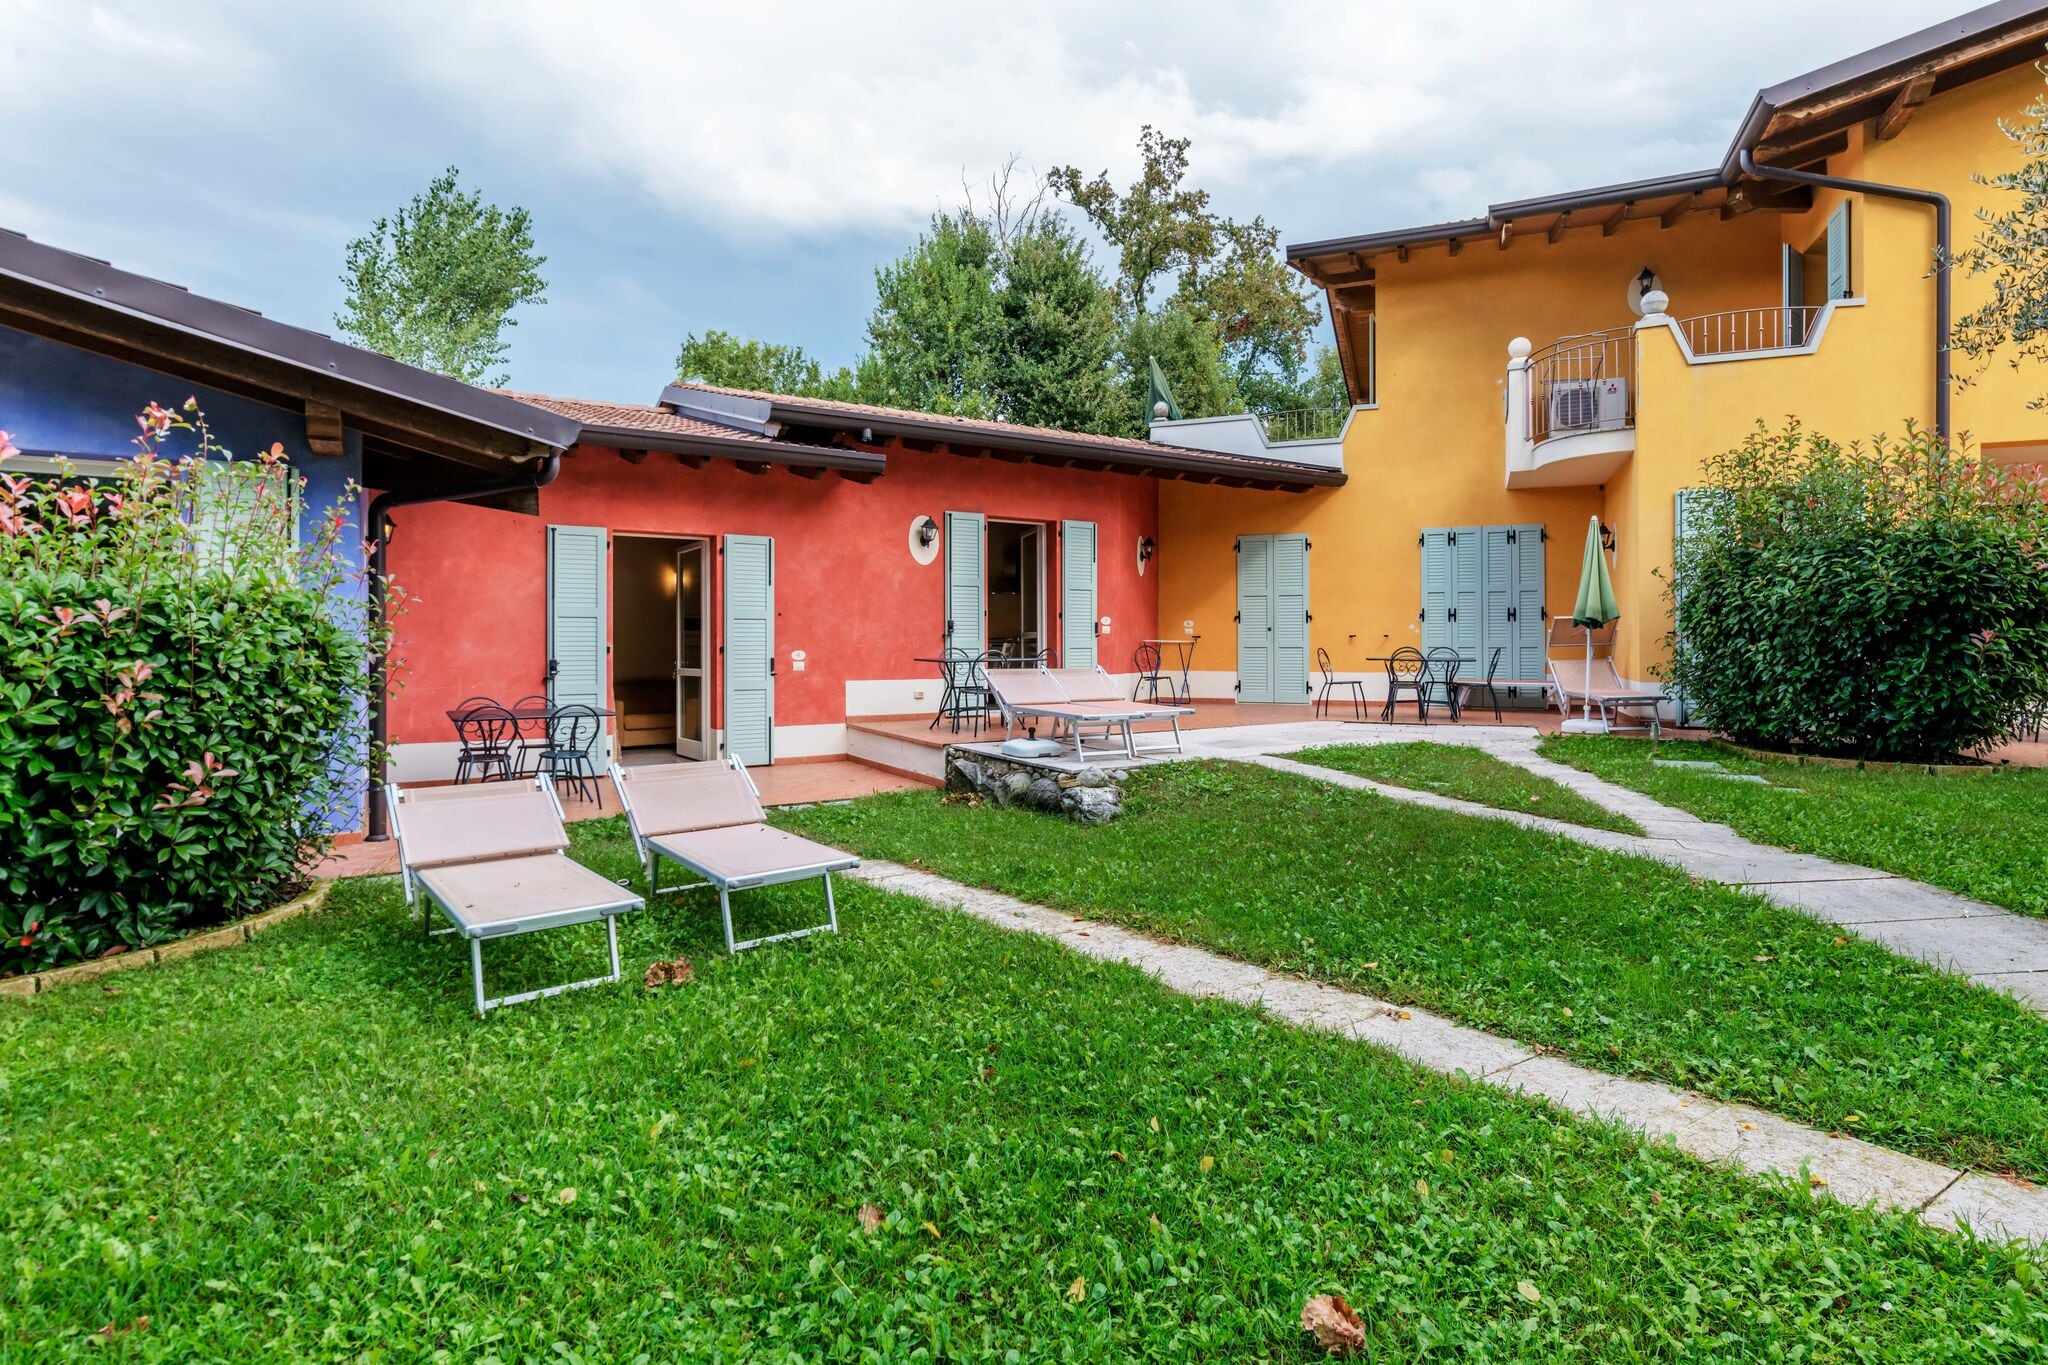 Maison de vacances moderne à Manerba del Garda, avec jardin